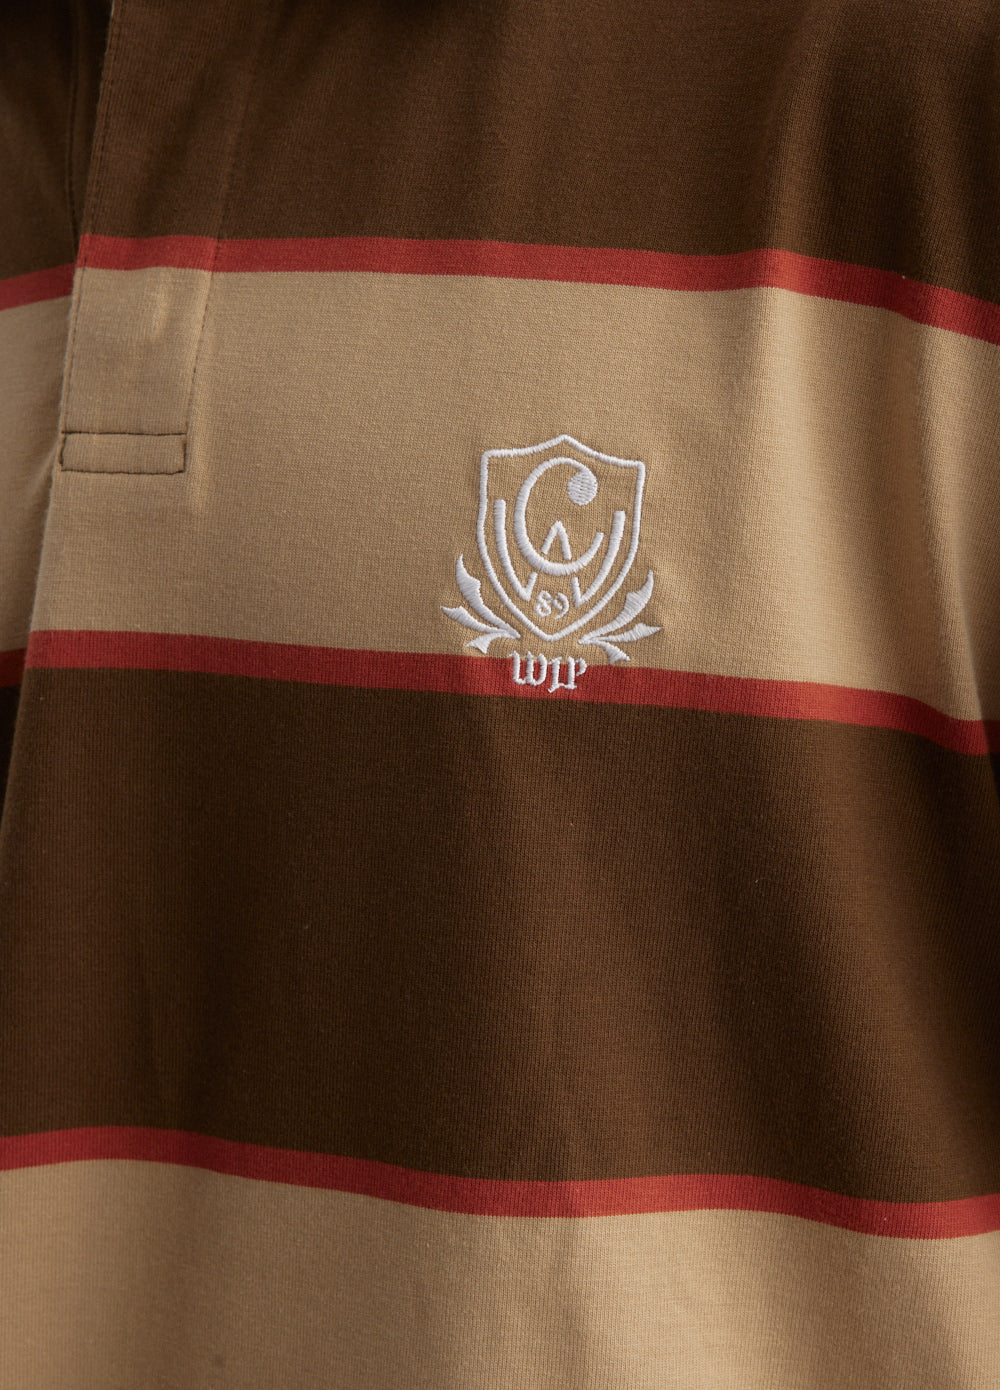 Long-Sleeve Wilt Rugby Shirt